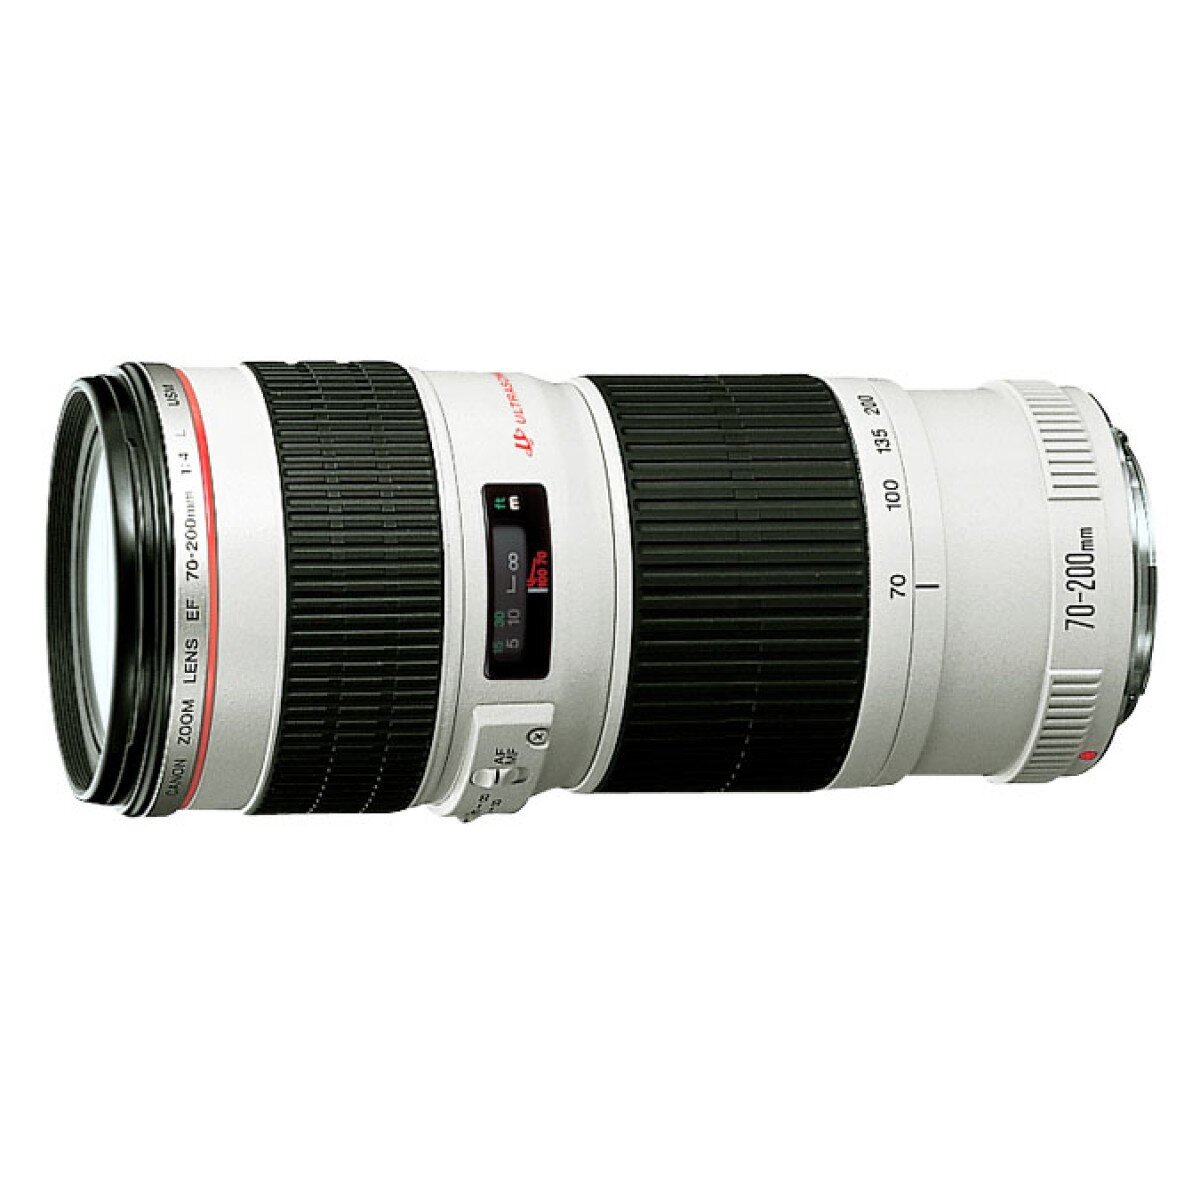 Buy Canon EF 70200mm Telephoto Zoom Lens online in